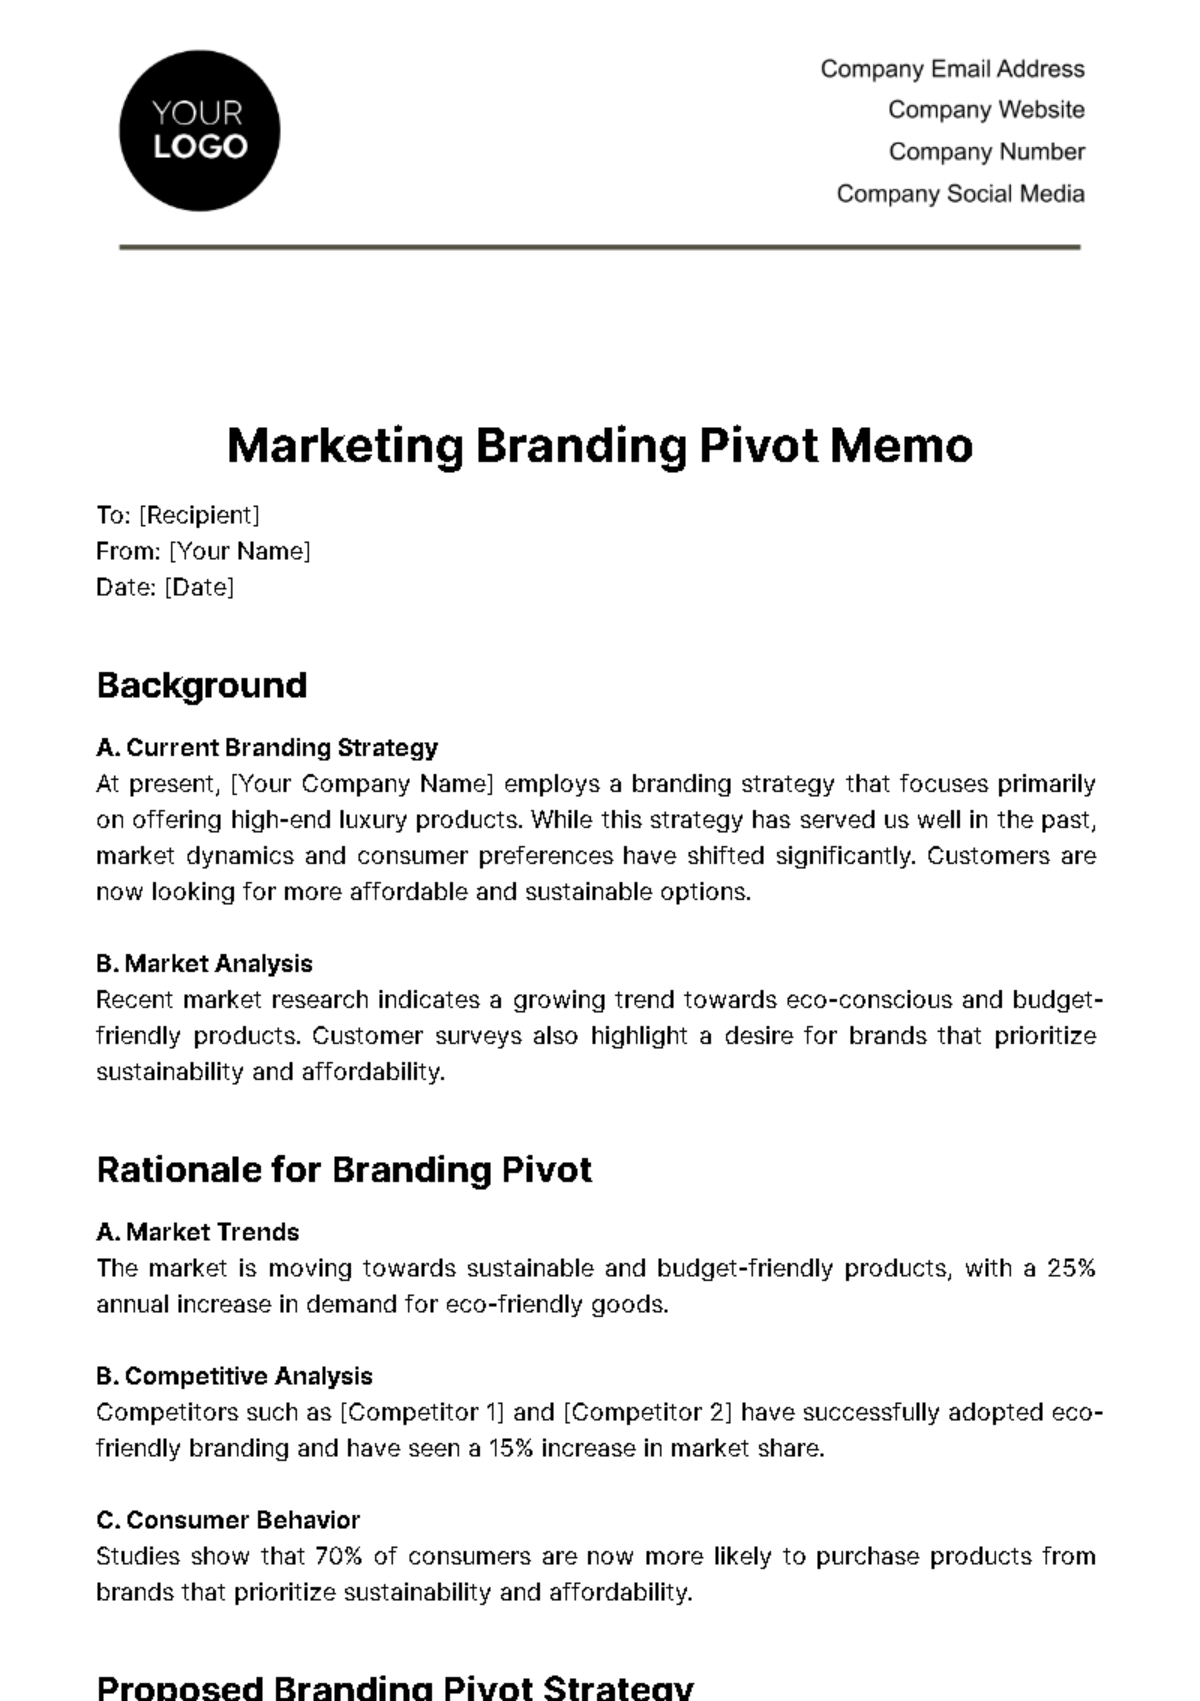 Marketing Branding Pivot Memo Template